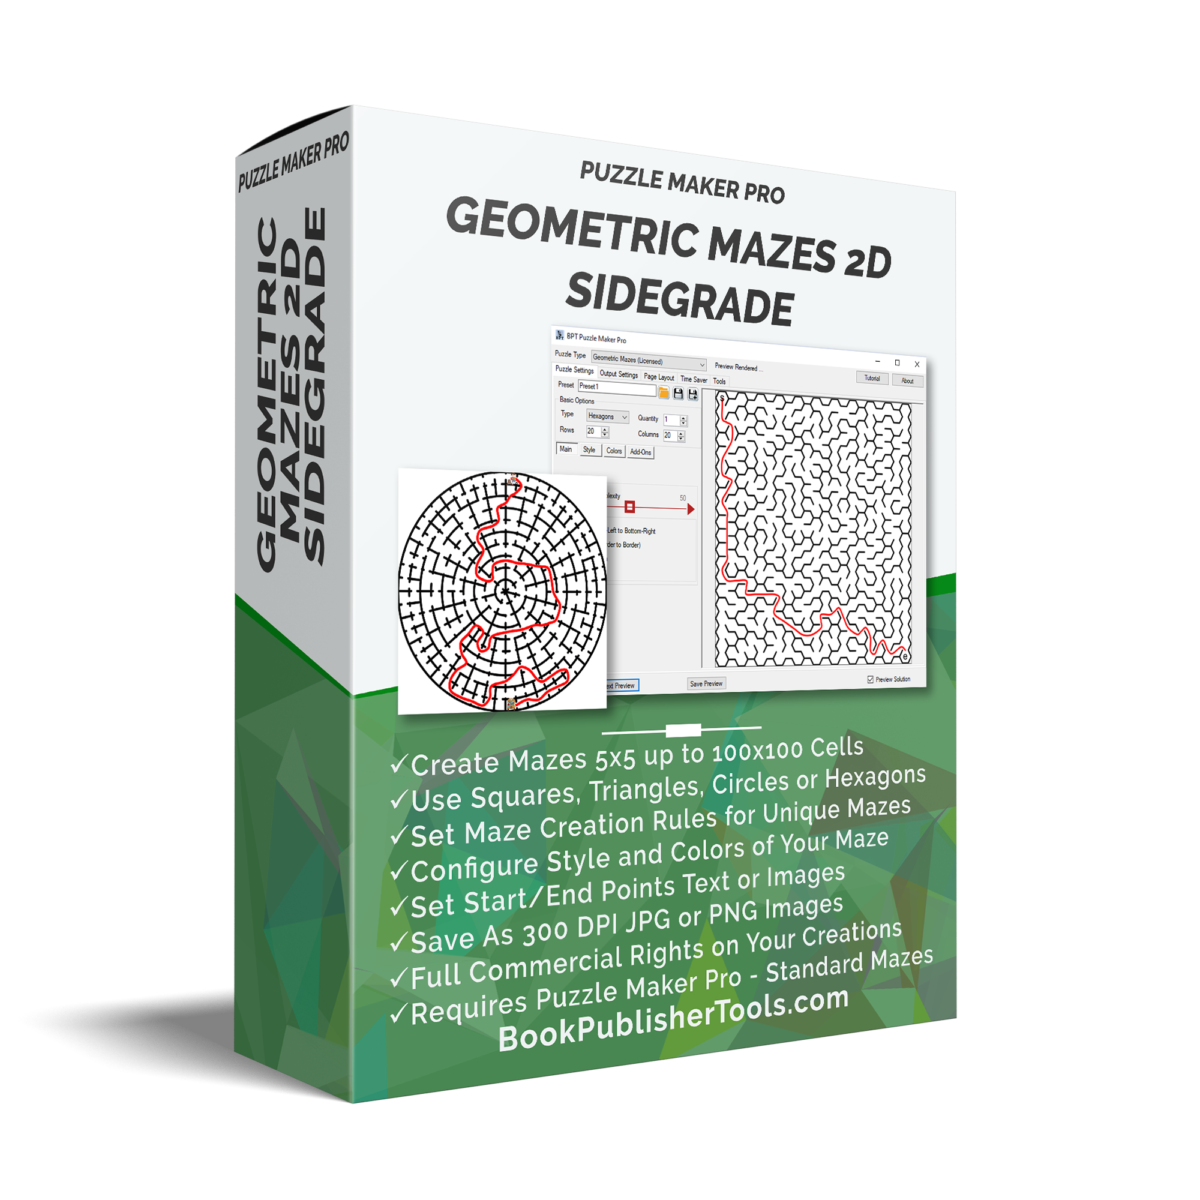 Puzzle Maker Pro Geometric Mazes 2D Sidegrade software box